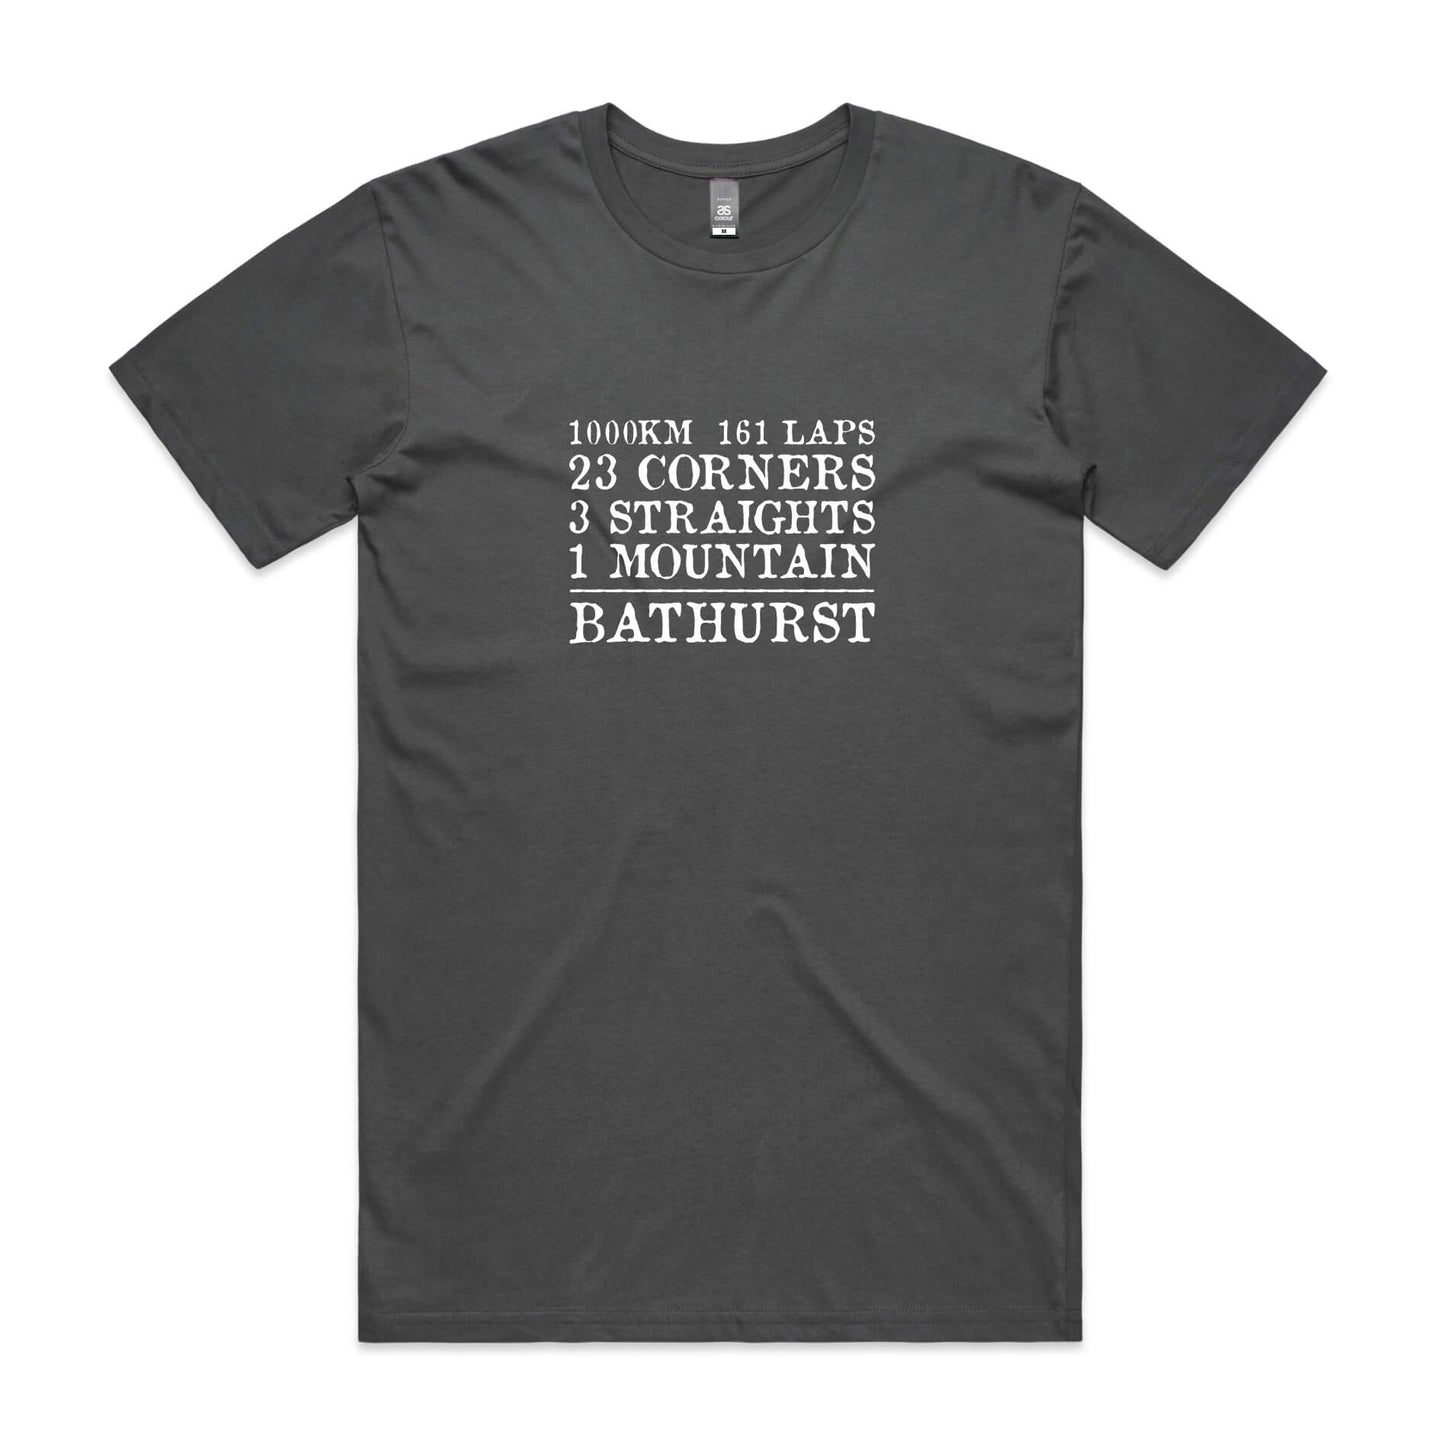 Charcoal grey car enthusiast t-shirt featuring Bathurst Mount Panorama race track slogan